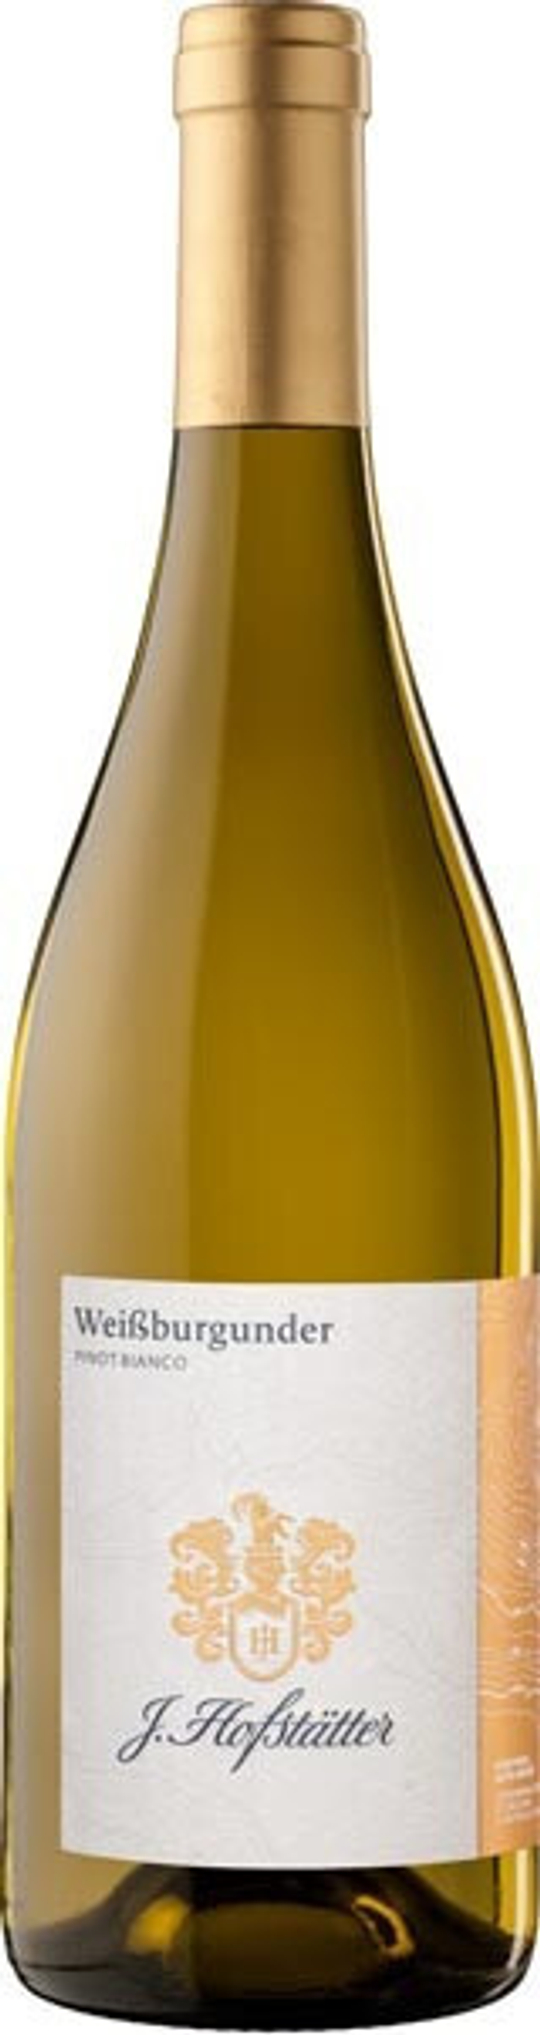 Вино Hofstatter Weissburgunder Pinot Bianco Alto Adige DOC, 0,75 л.